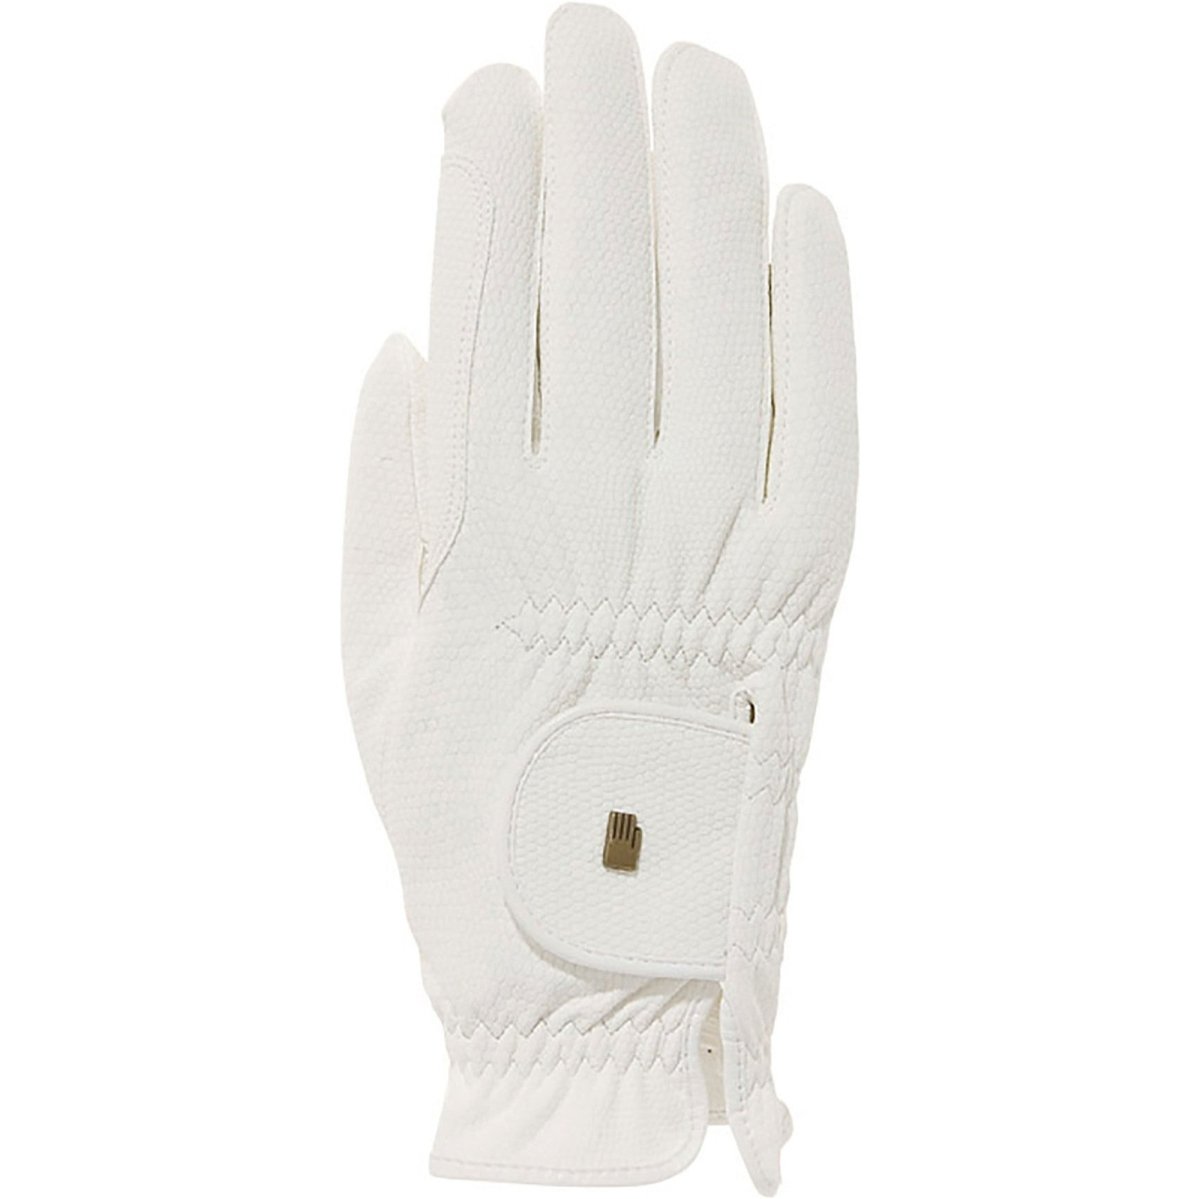 Roeckl Malta Winter Gloves - White - 7.0